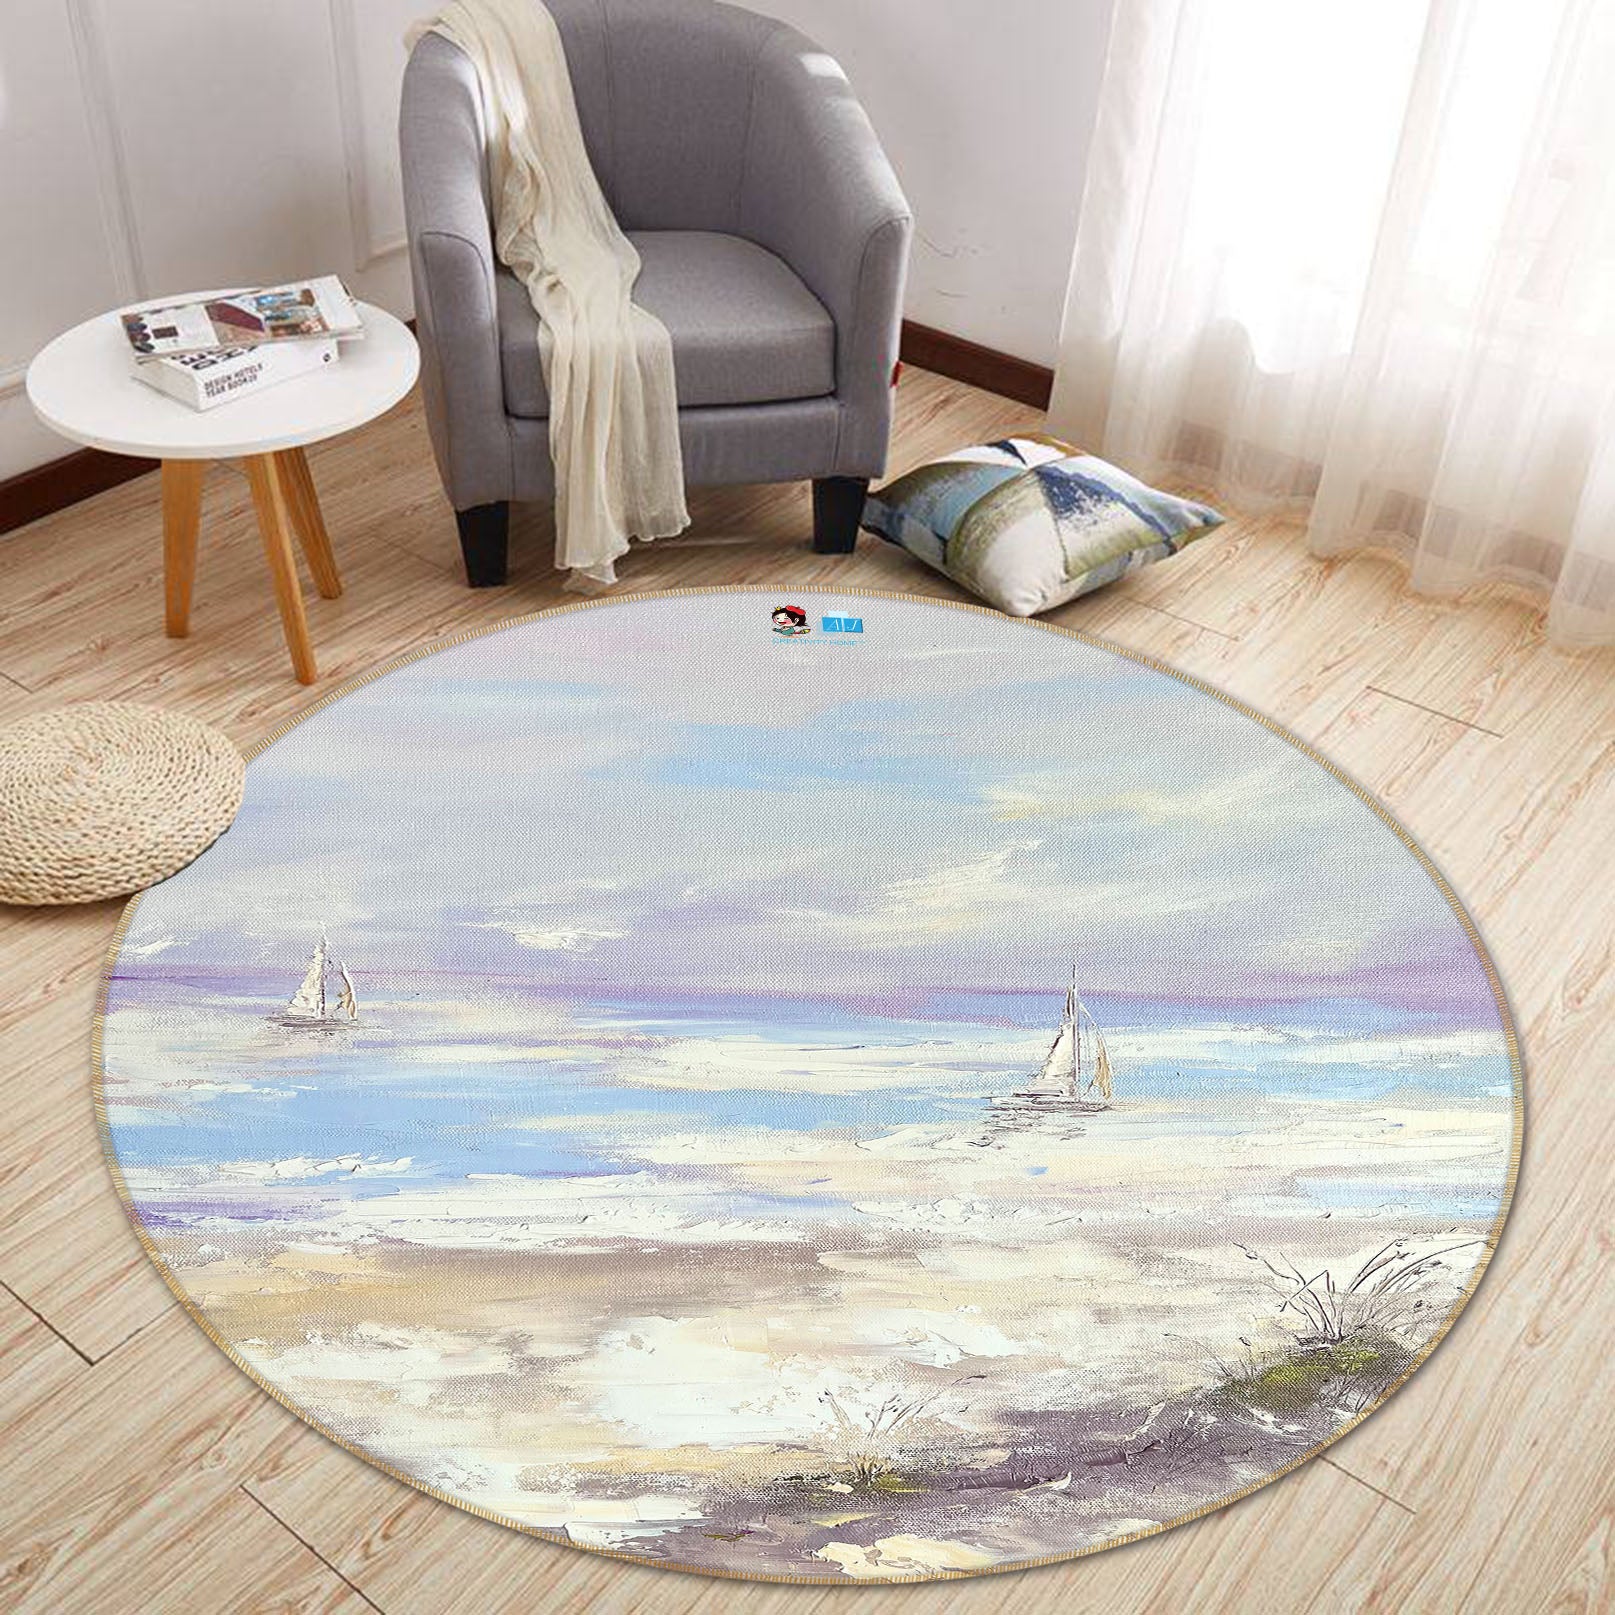 3D Ocean Painting 3875 Skromova Marina Rug Round Non Slip Rug Mat